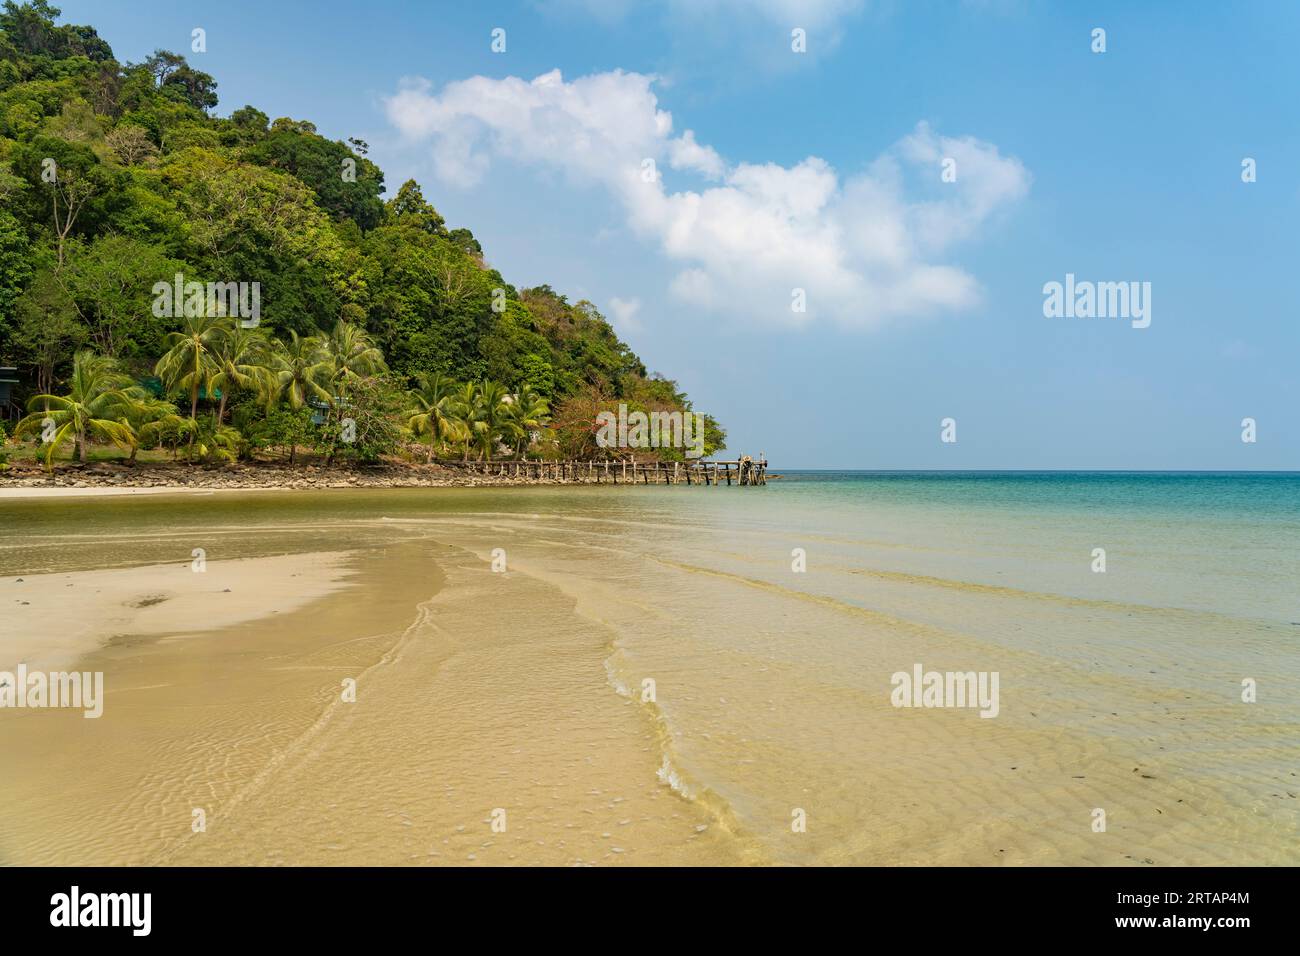 Bang Bao beach and bay, Ko Kut or Koh Kood island in the Gulf of Thailand, Asia Stock Photo